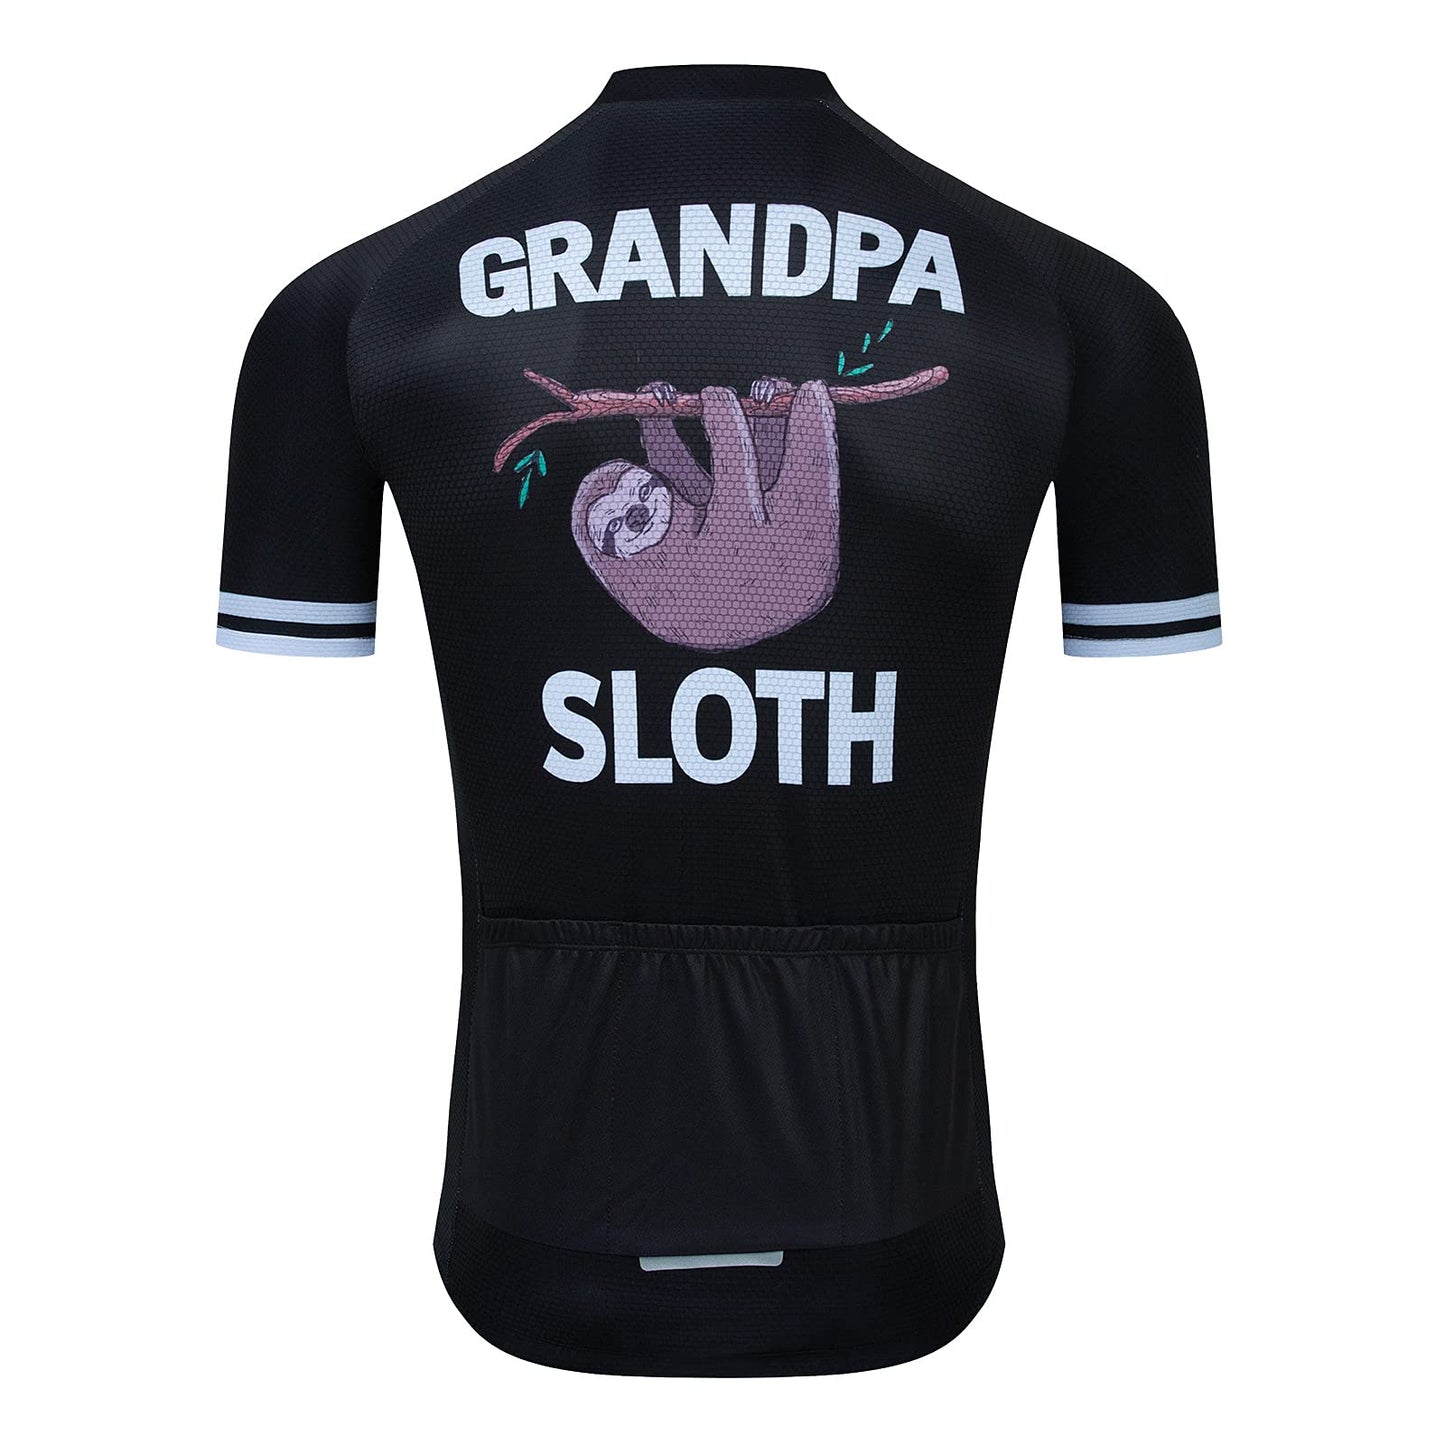 Grandpa Sloth Black Funny MTB Short Sleeve Cycling Jersey Top